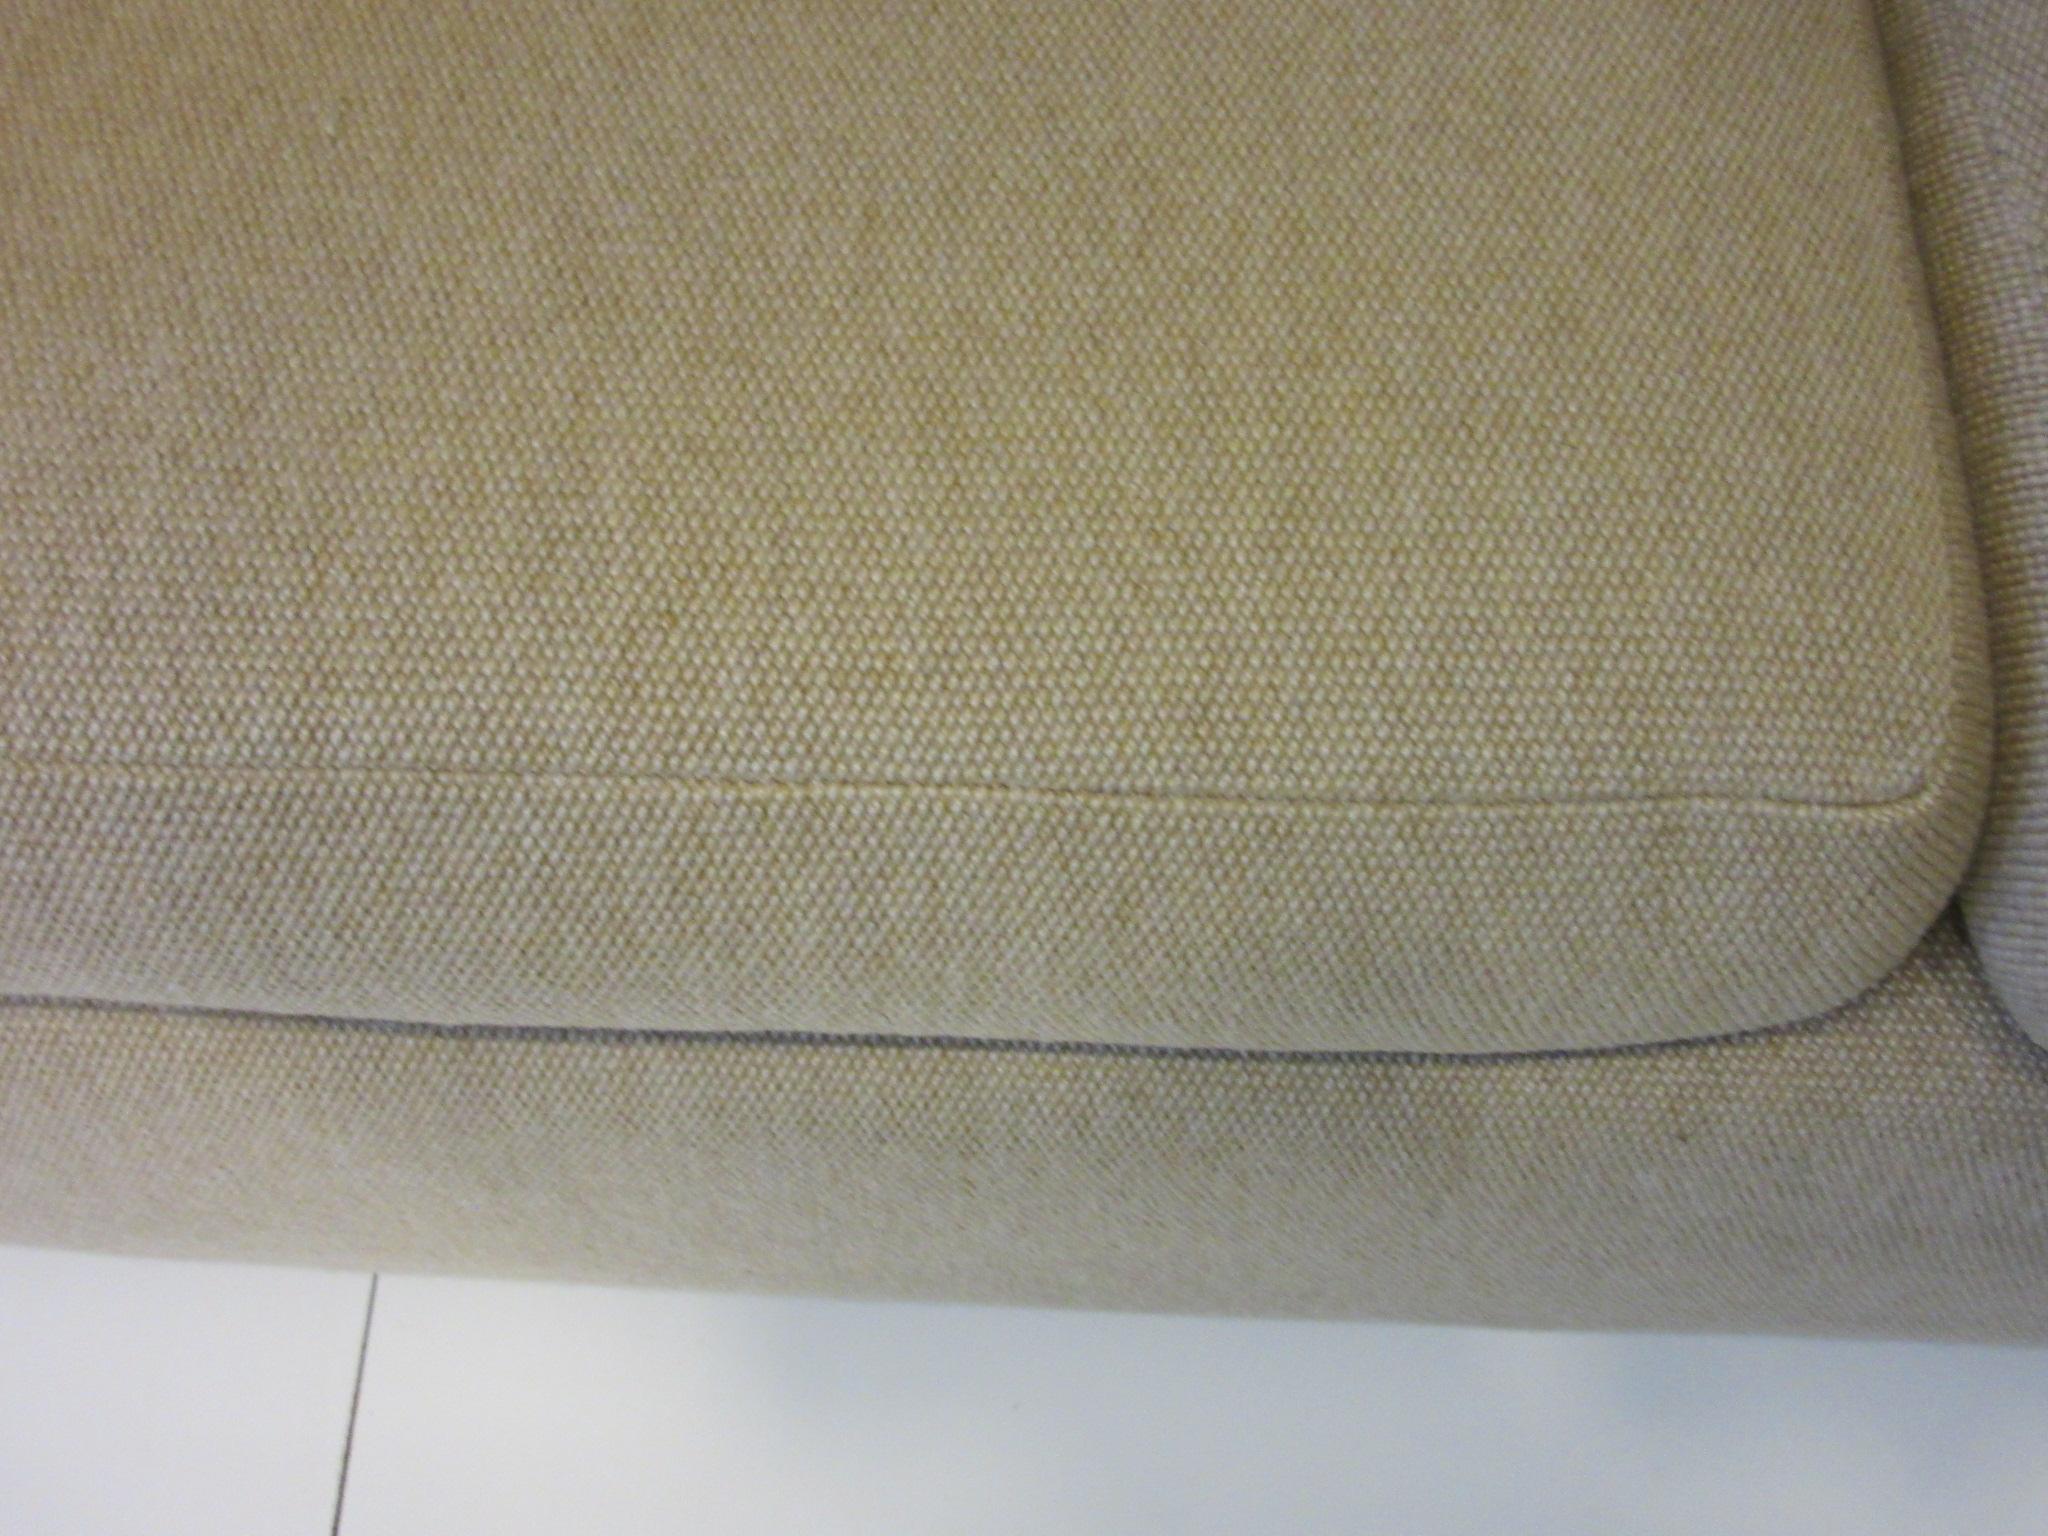 Upholstery Milo Baughman Tuxedo Styled Sofa for Thayer Coggin